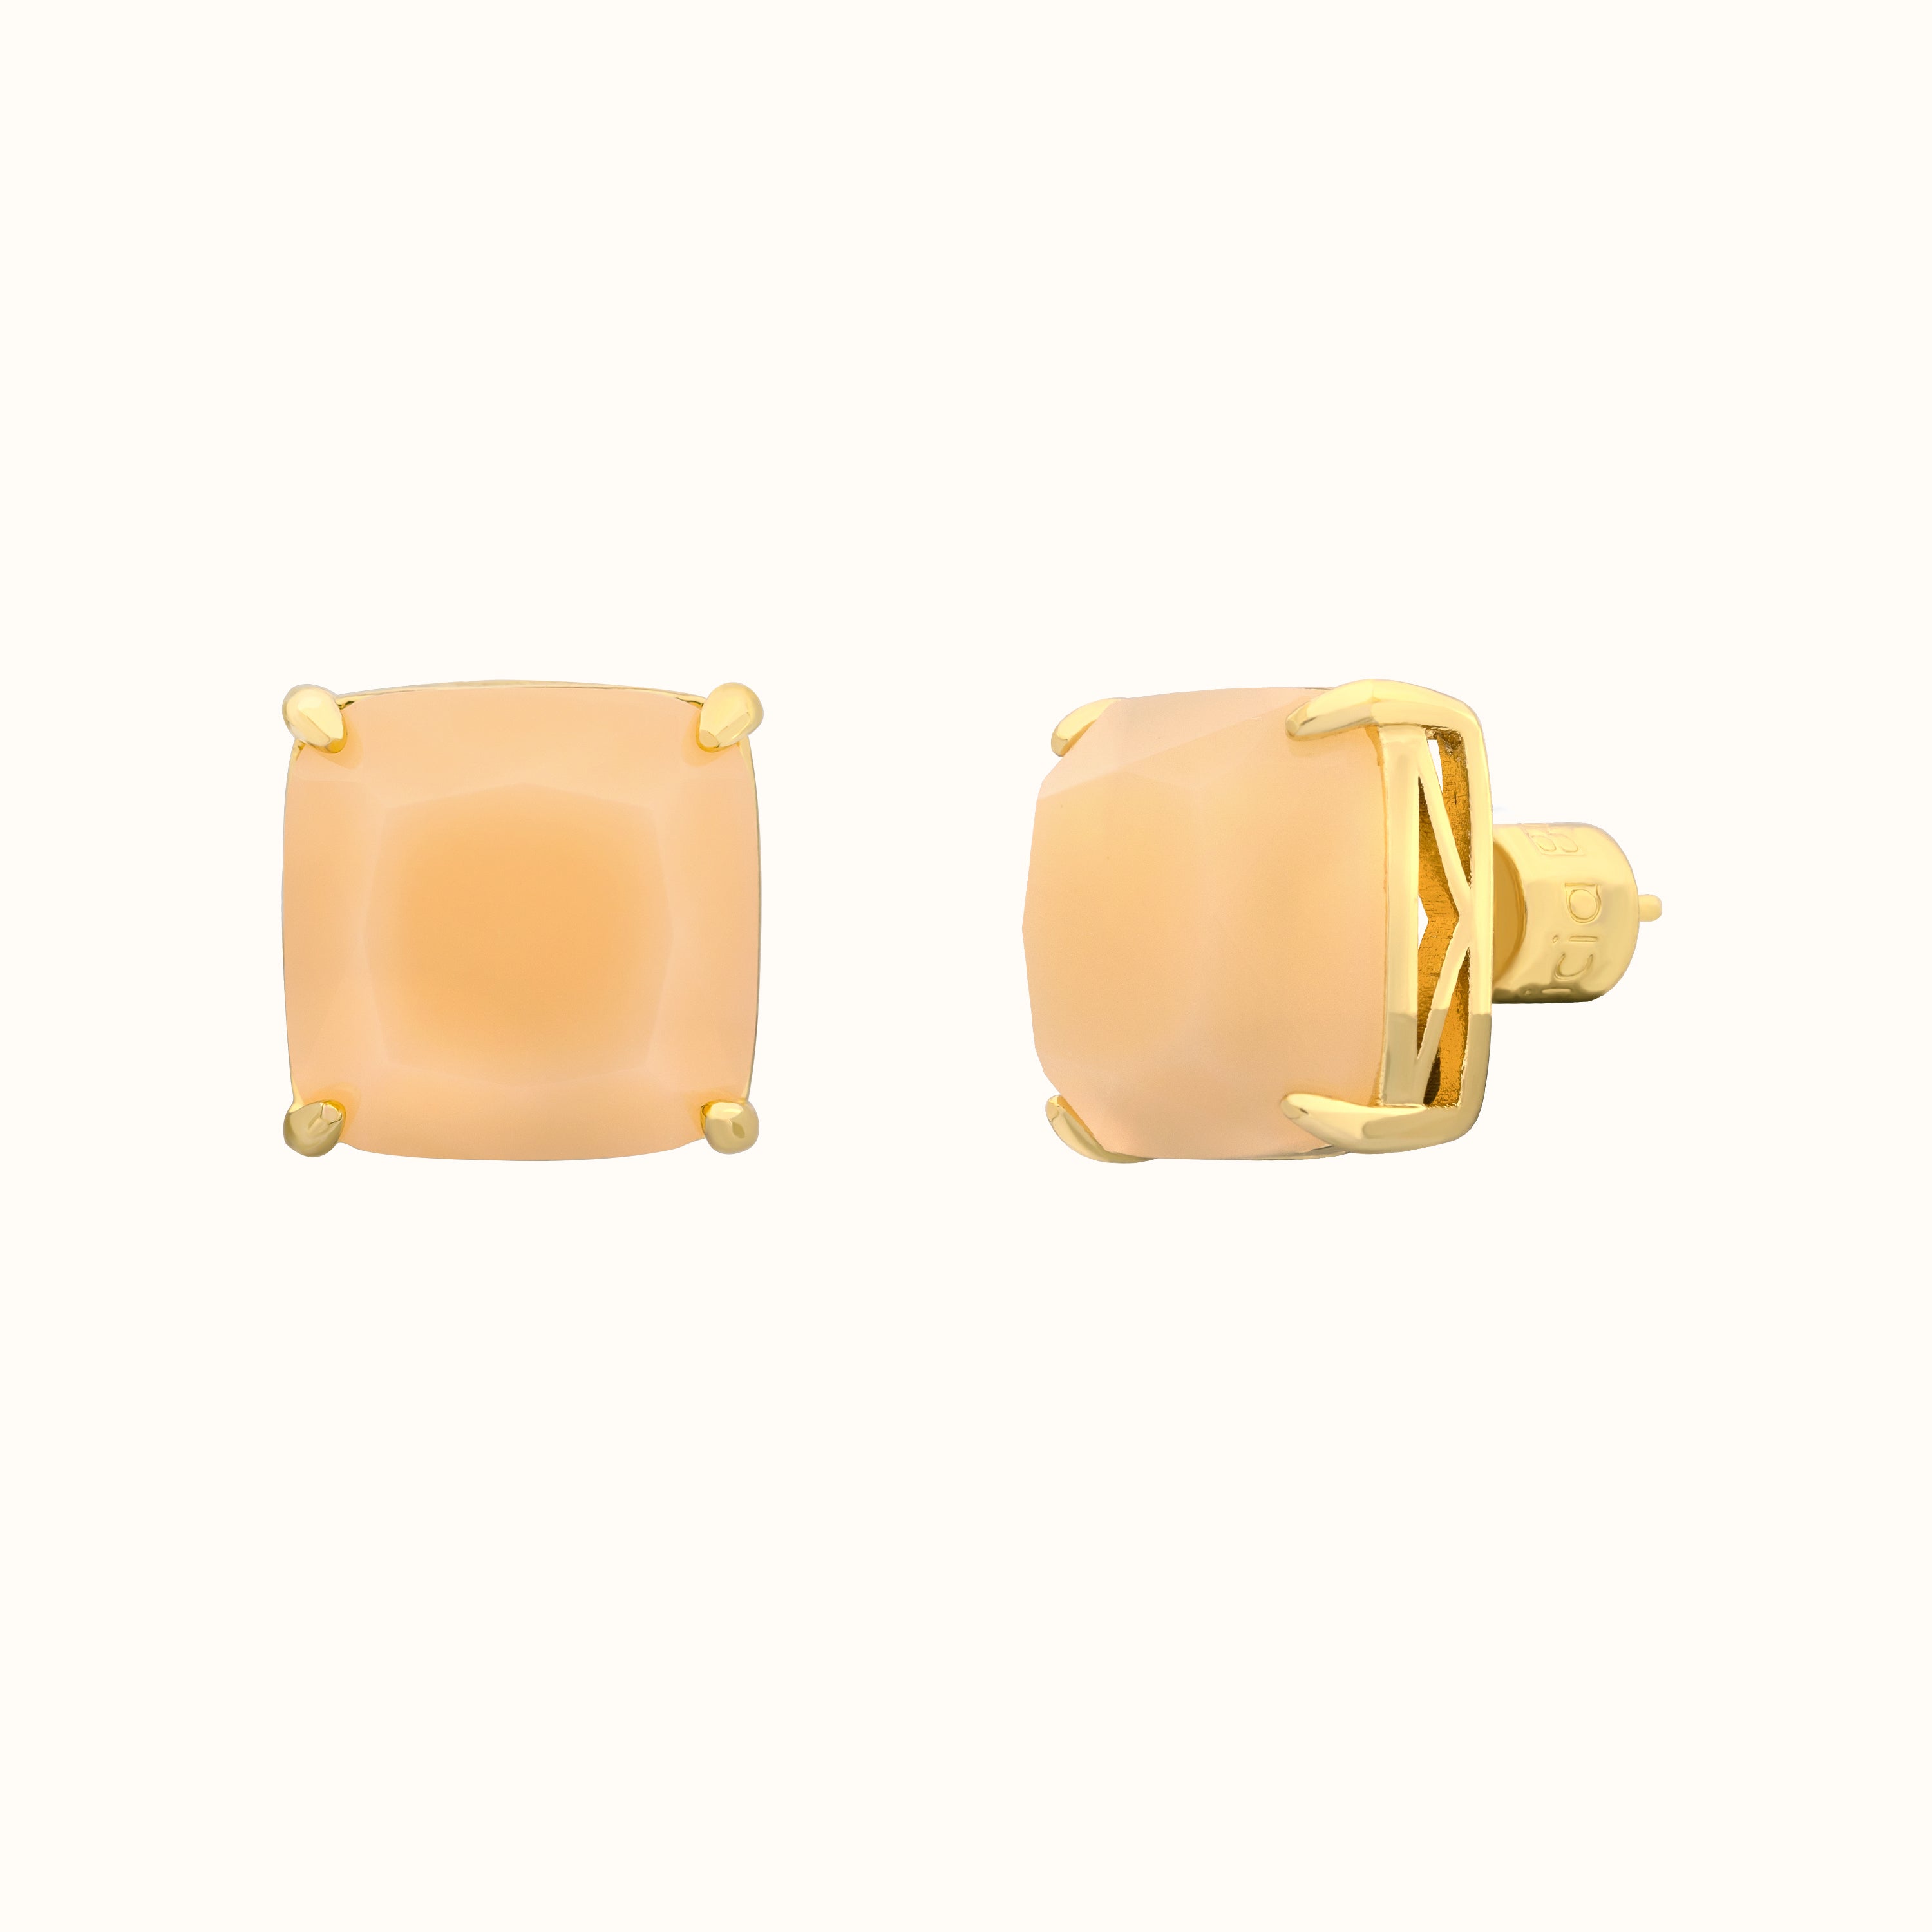 MileagePlus Merchandise Awards. Kate Spade Earrings Small Square Stud  Earrings - Iridescent